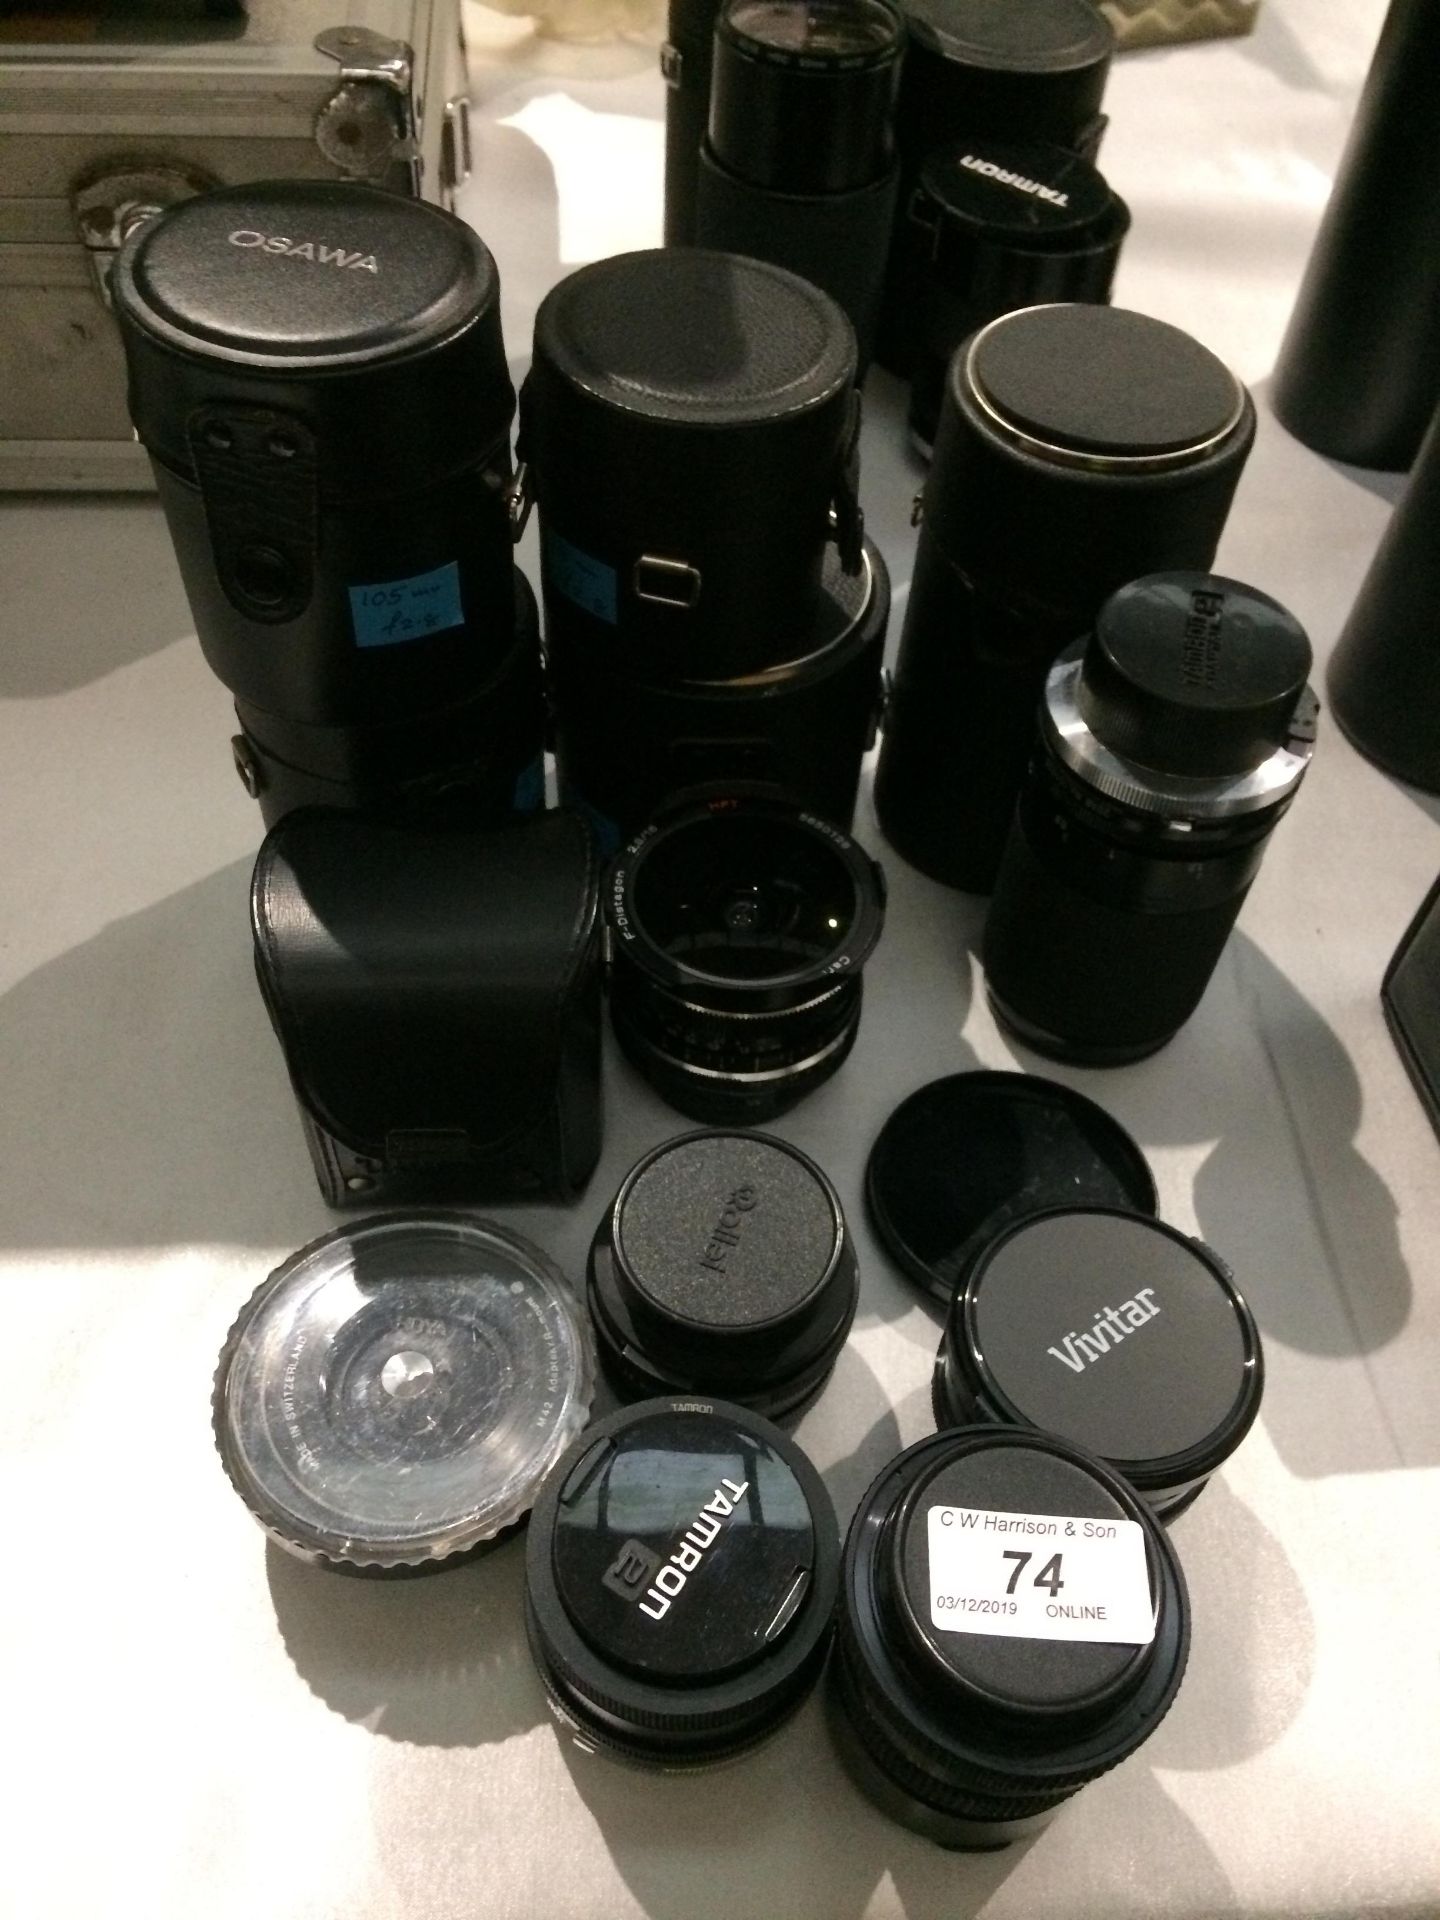 6 x assorted camera lenses by Tamron, Osawa,